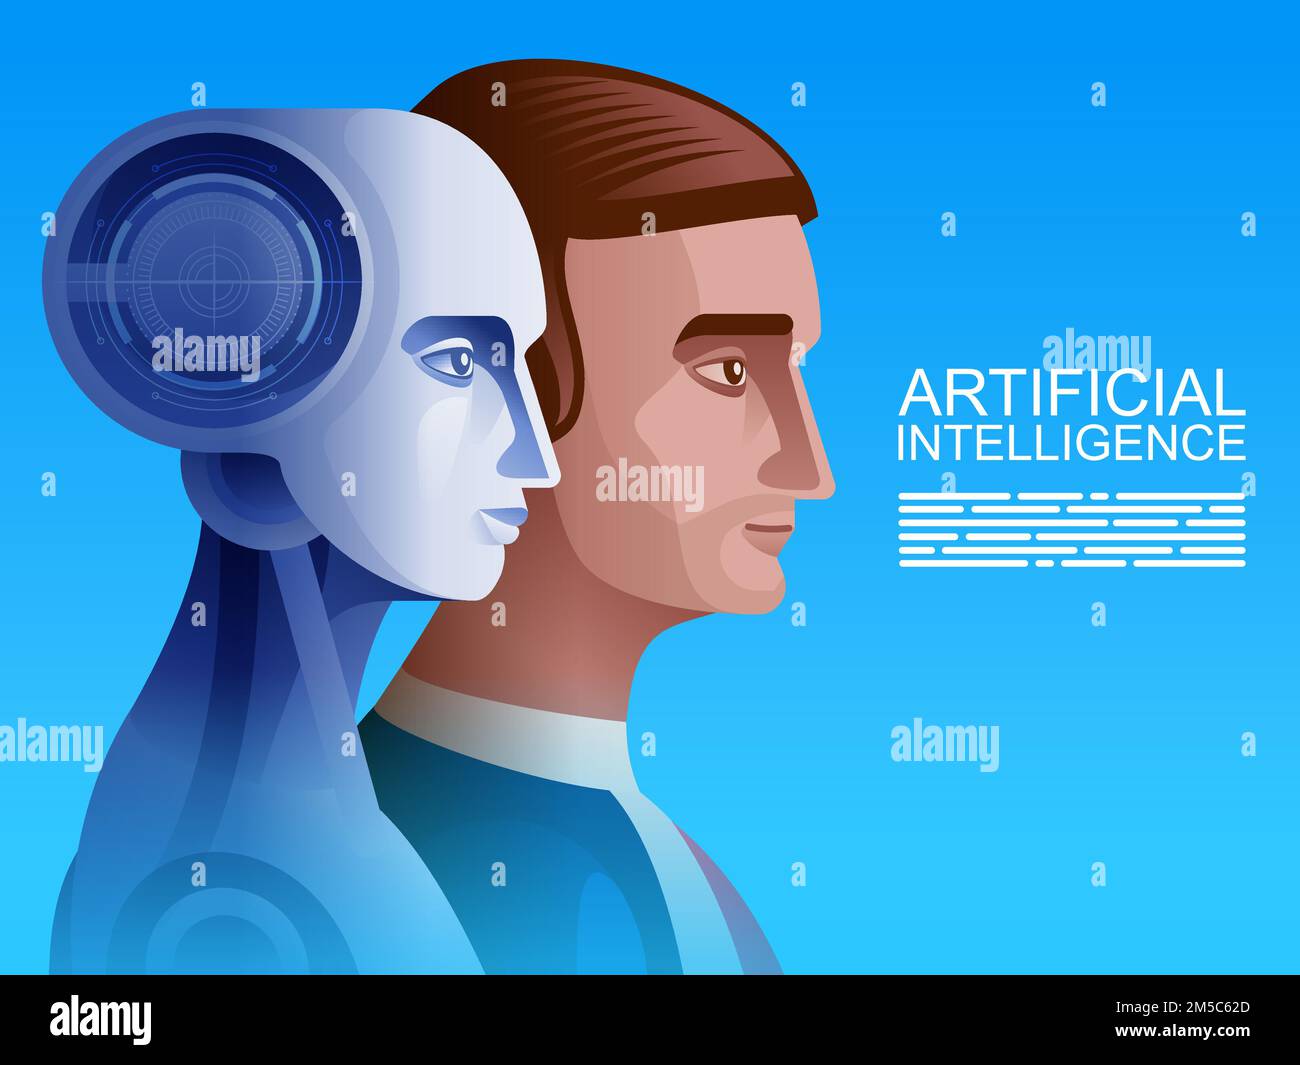 Artificial intelligence. Human vs Robot. Future cybernetic machines ...